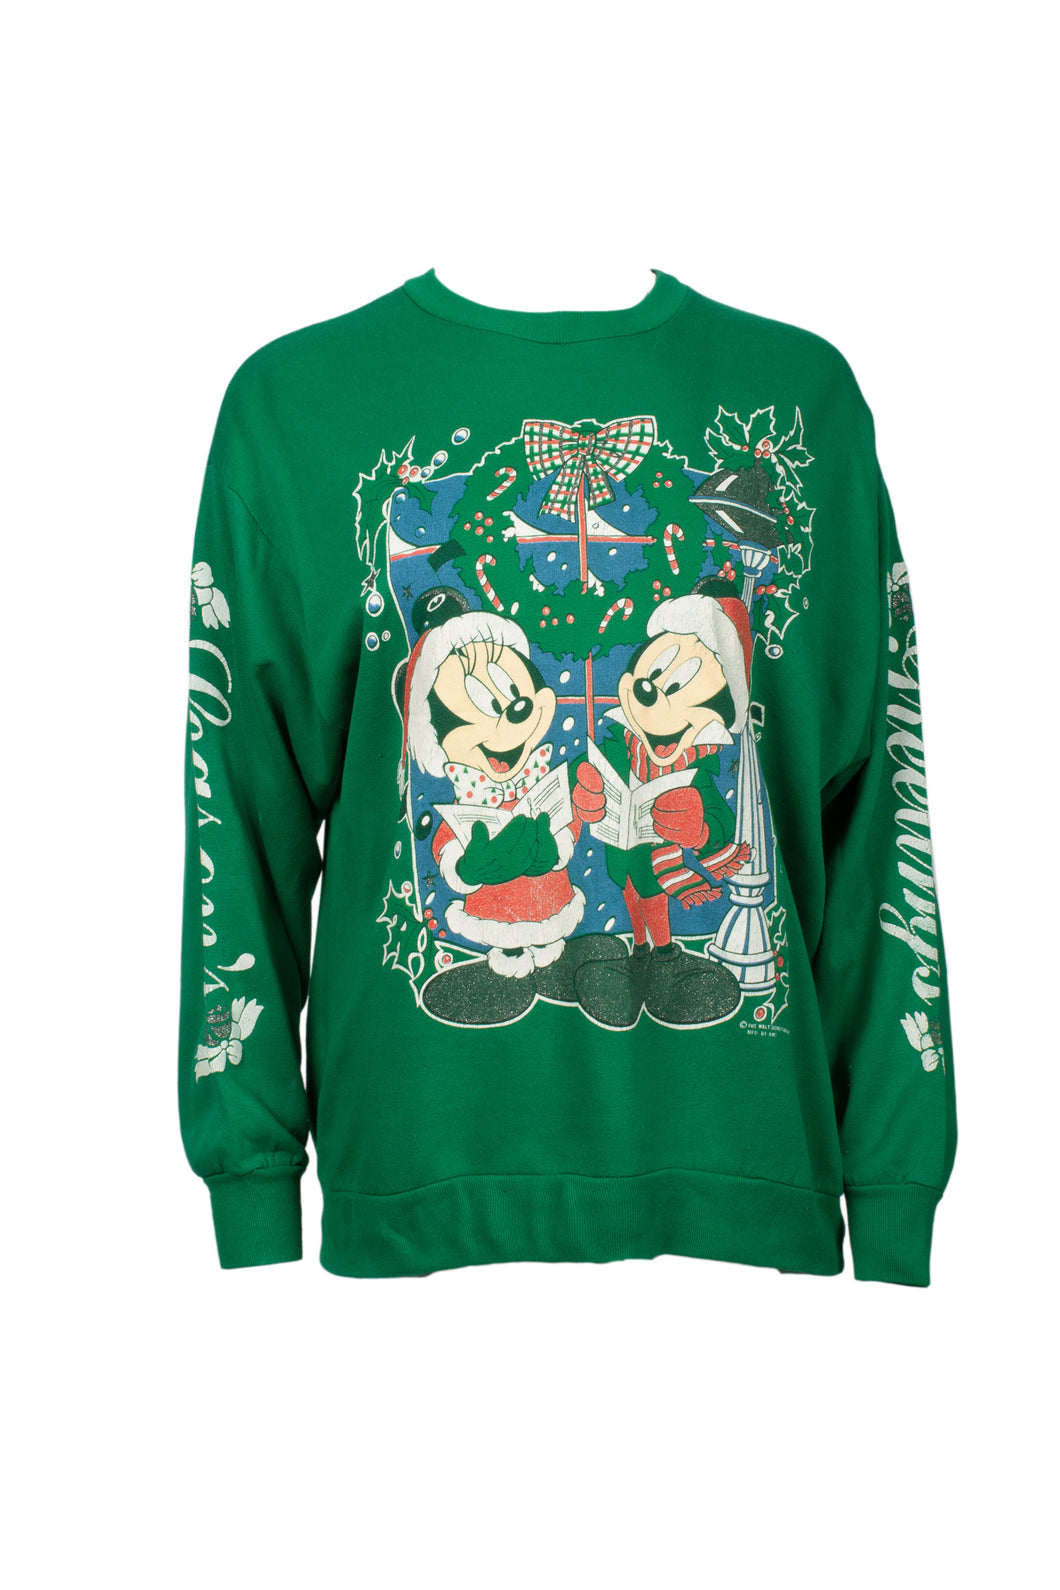 Green Christmas Walt Disney Mickey and Minnie jumper